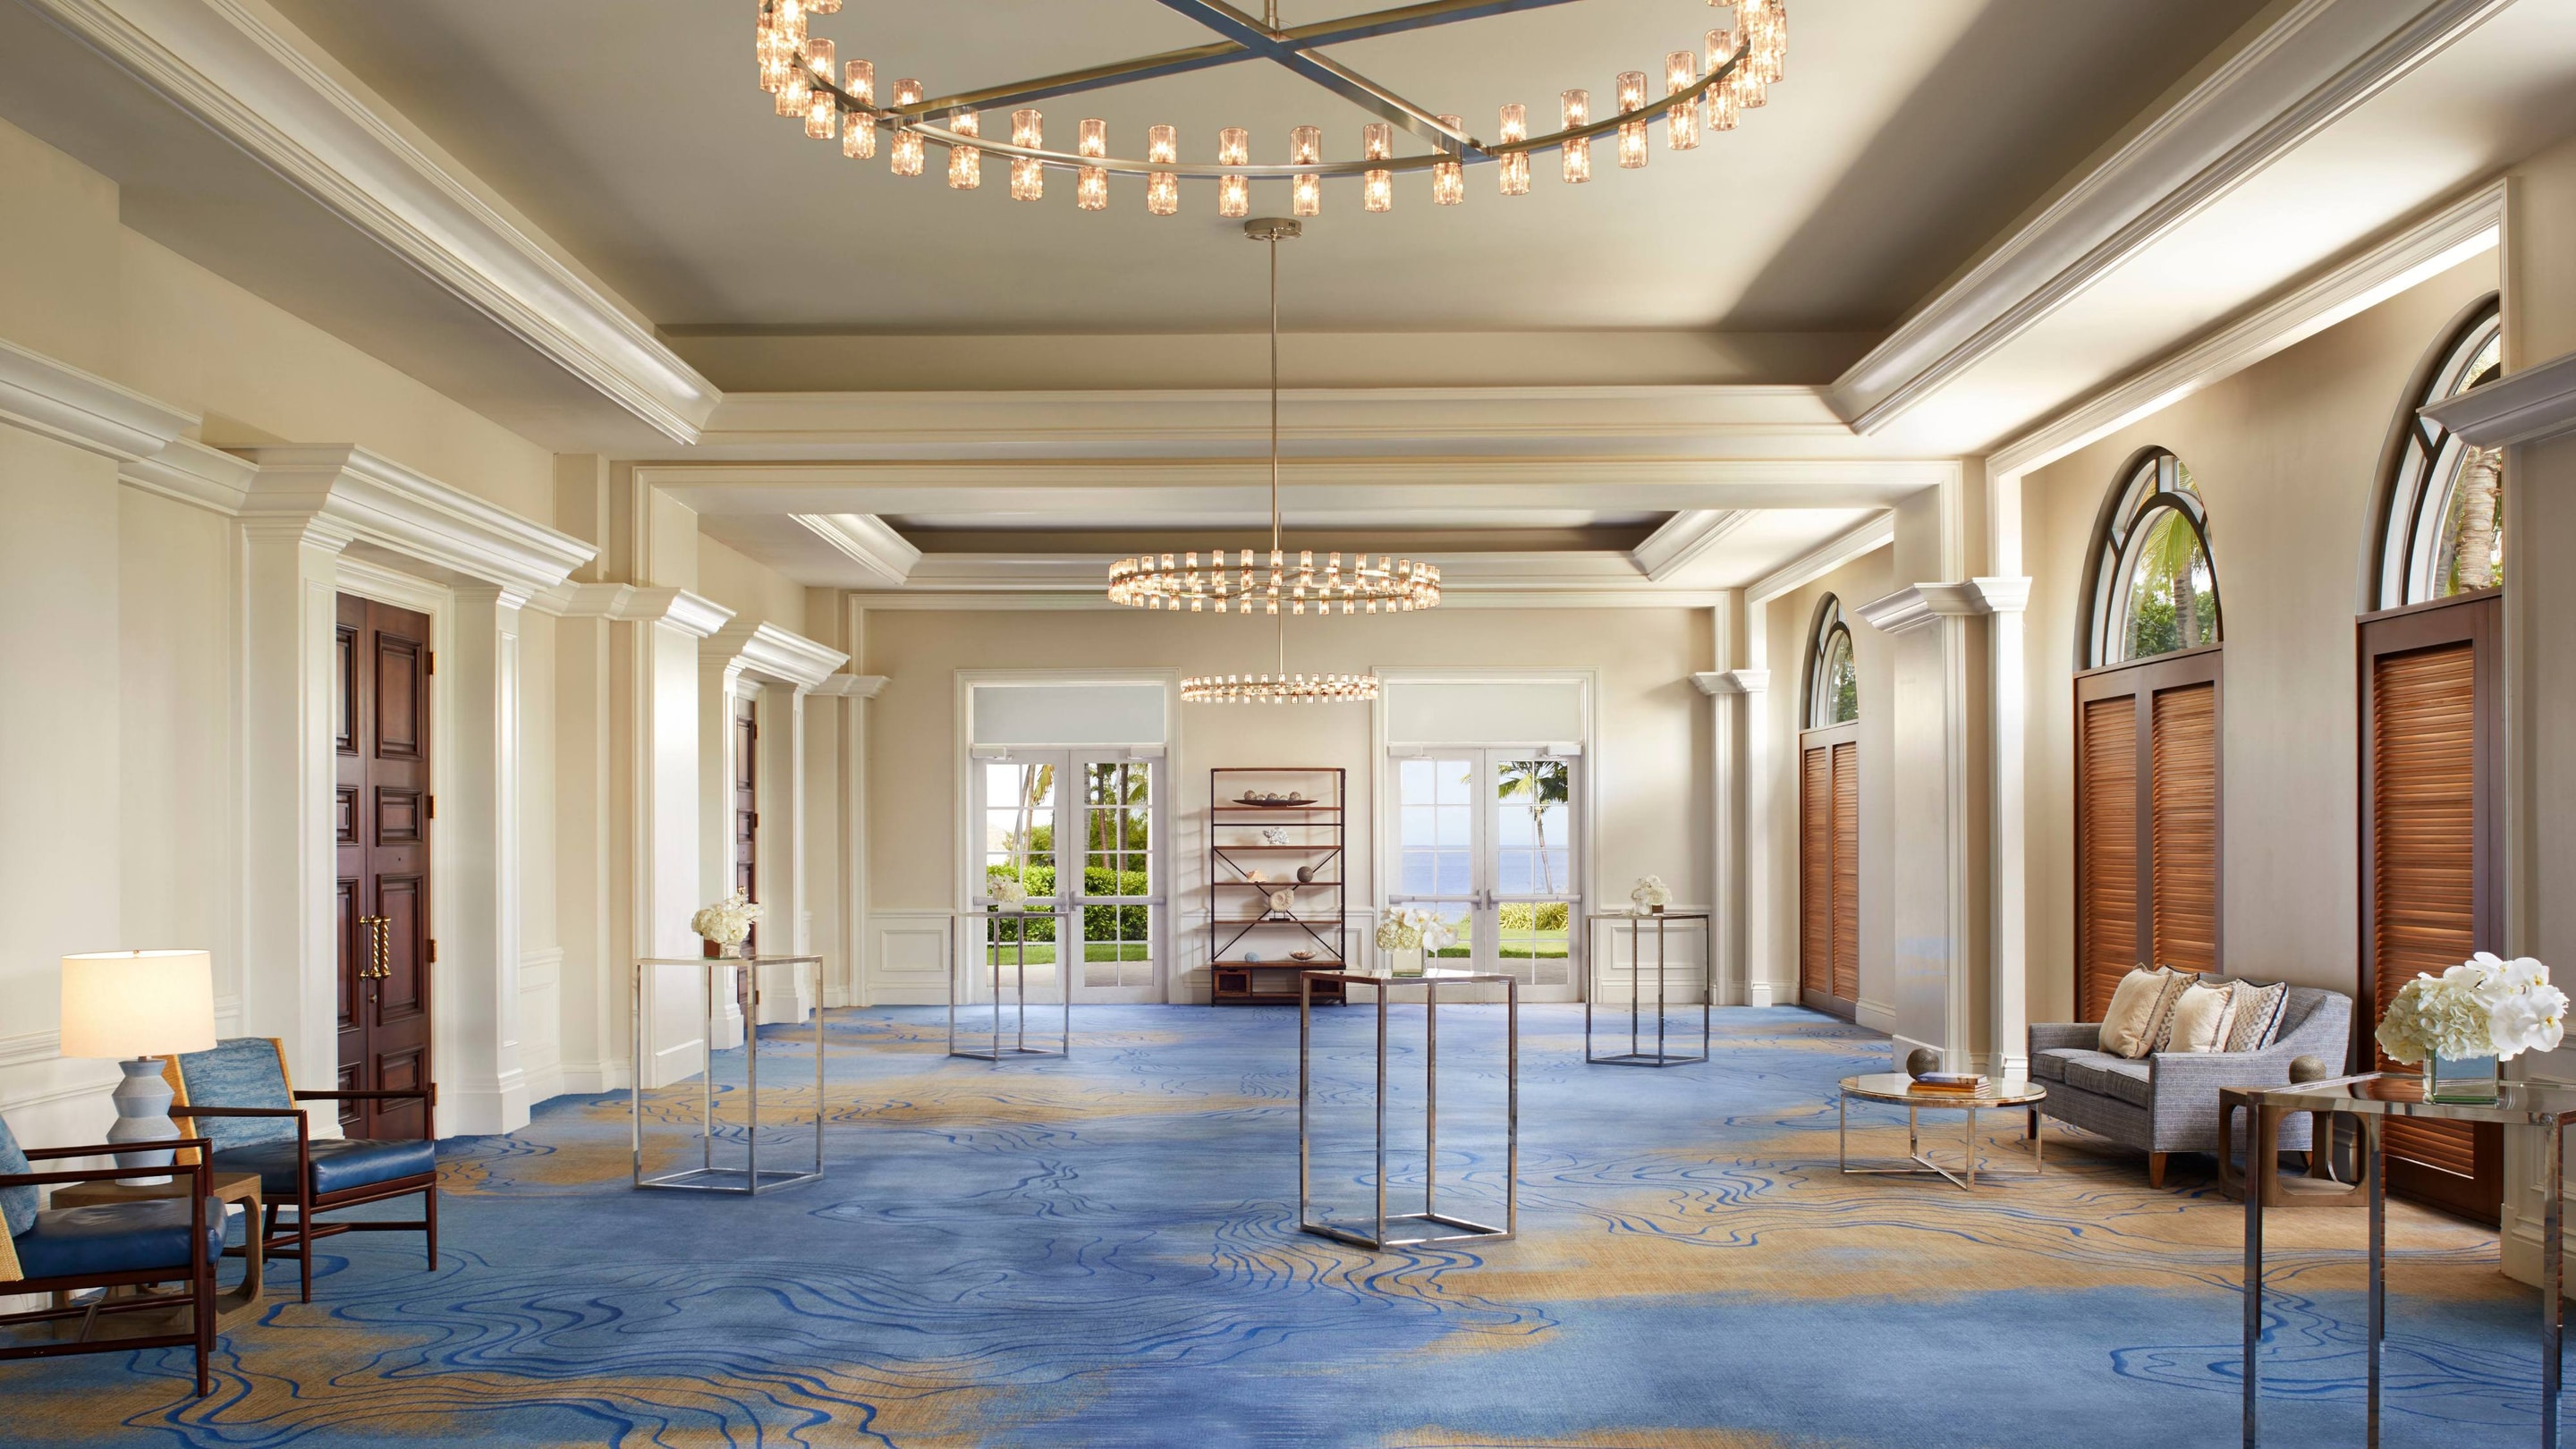 The Ritz-Carlton Ballroom Foyer